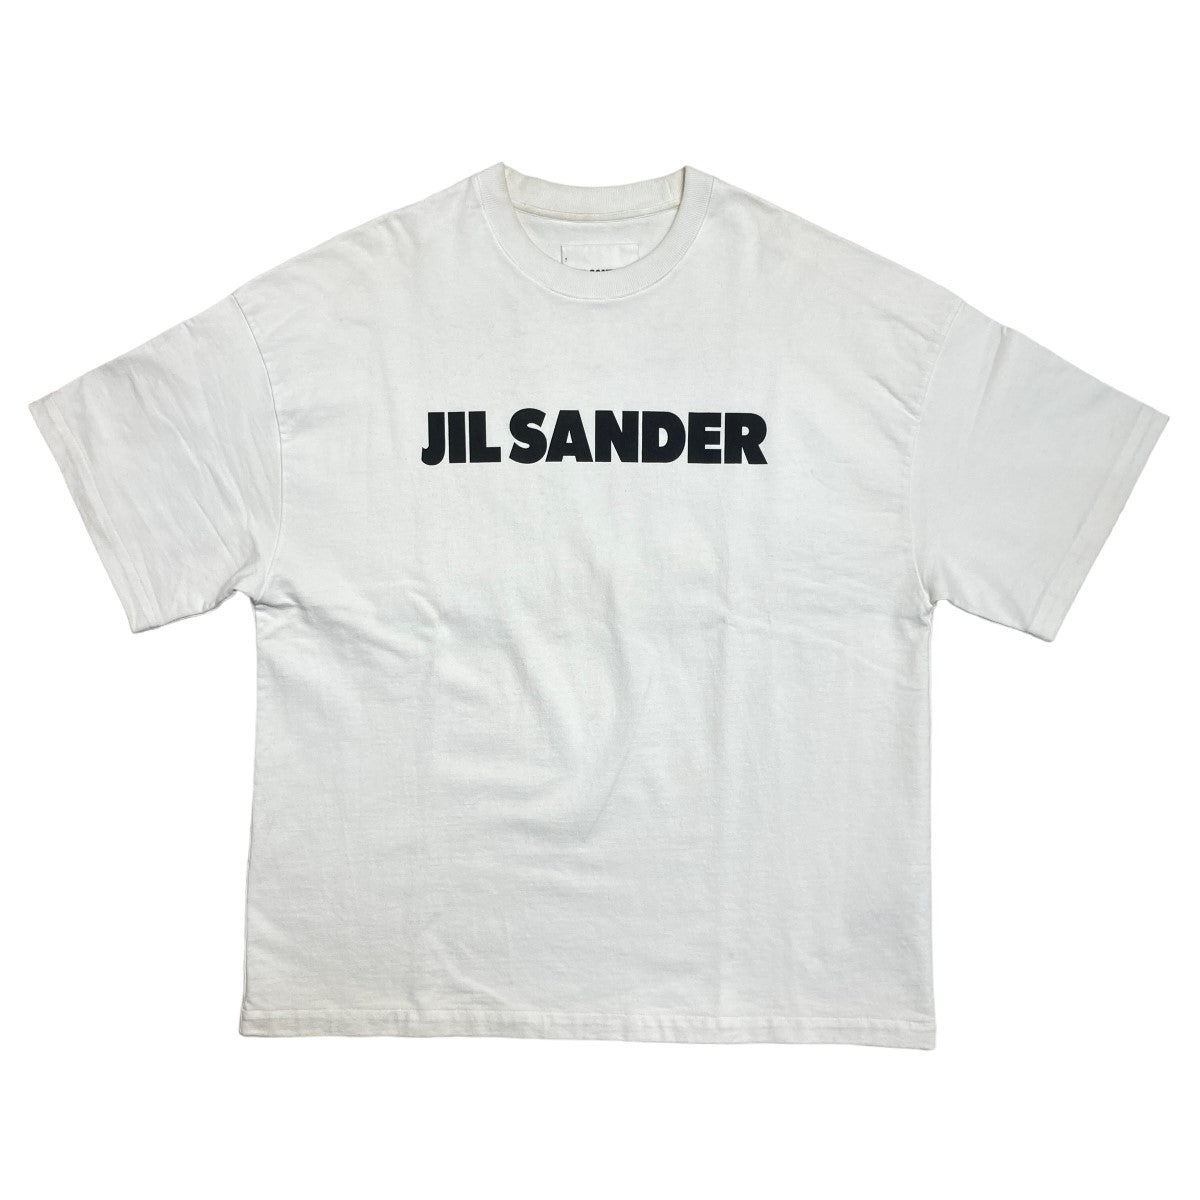 JIL SANDER LOGO OVER S/S TEE Lサイズ ジルサンダー ロゴプリント ...